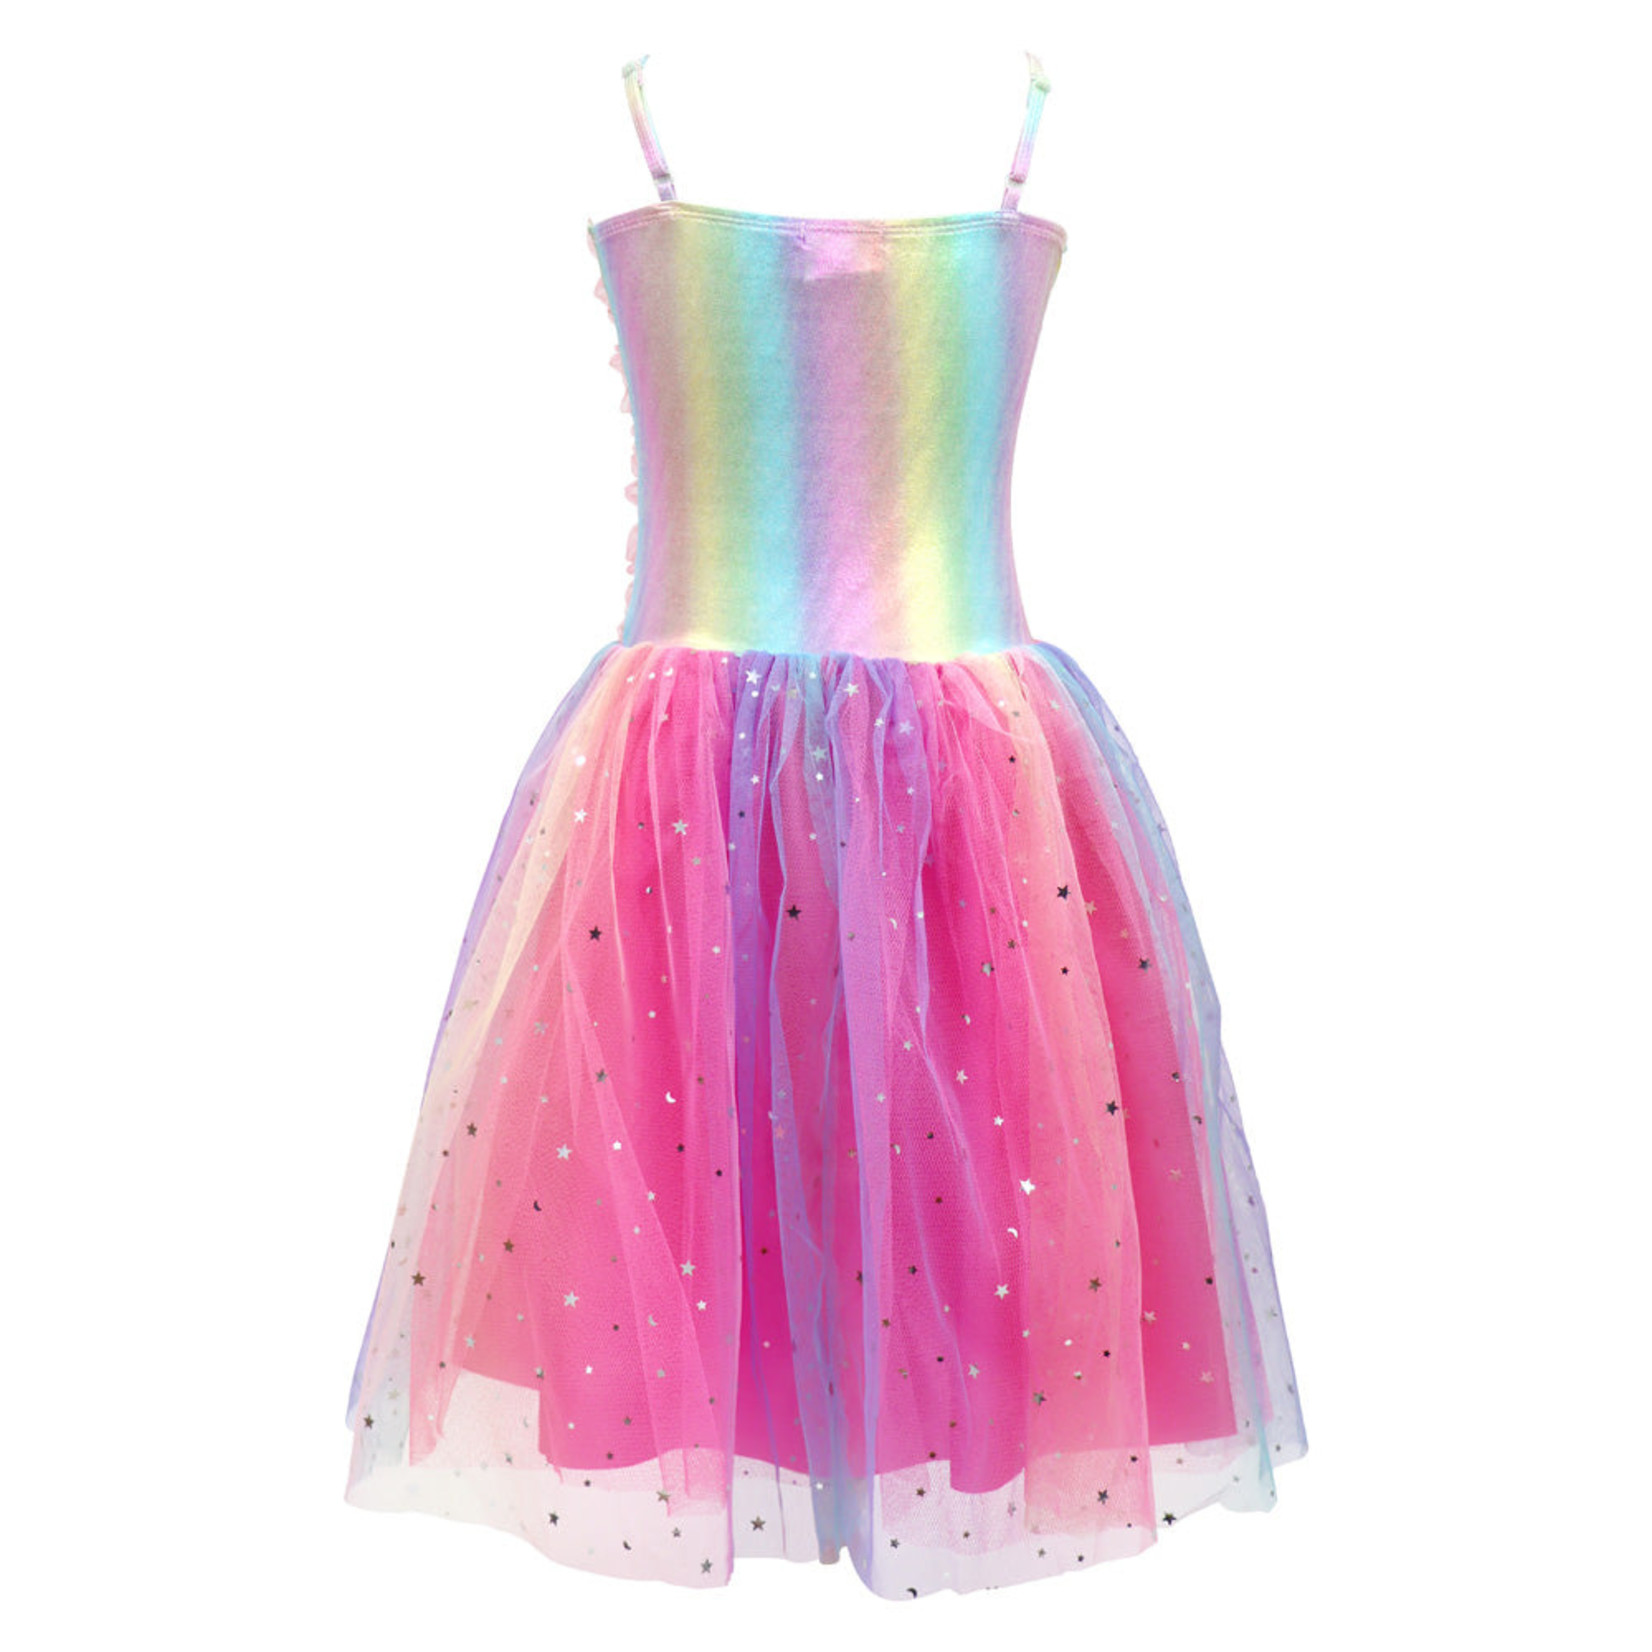 Rainbow 3 layered tulle dress